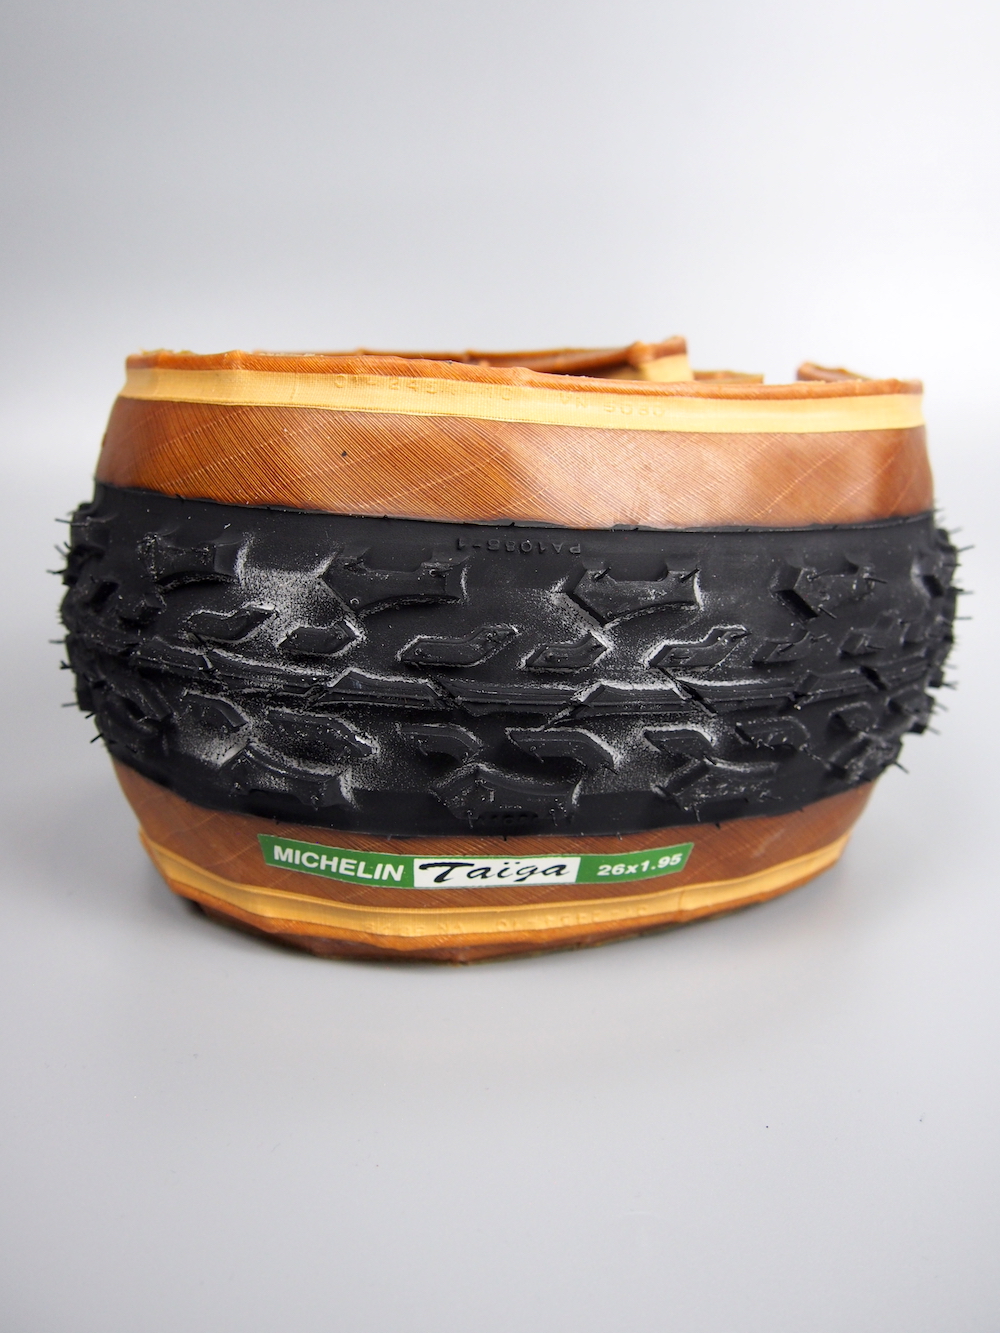 Michelin Taiga skinwall folding 26" MTB tyre